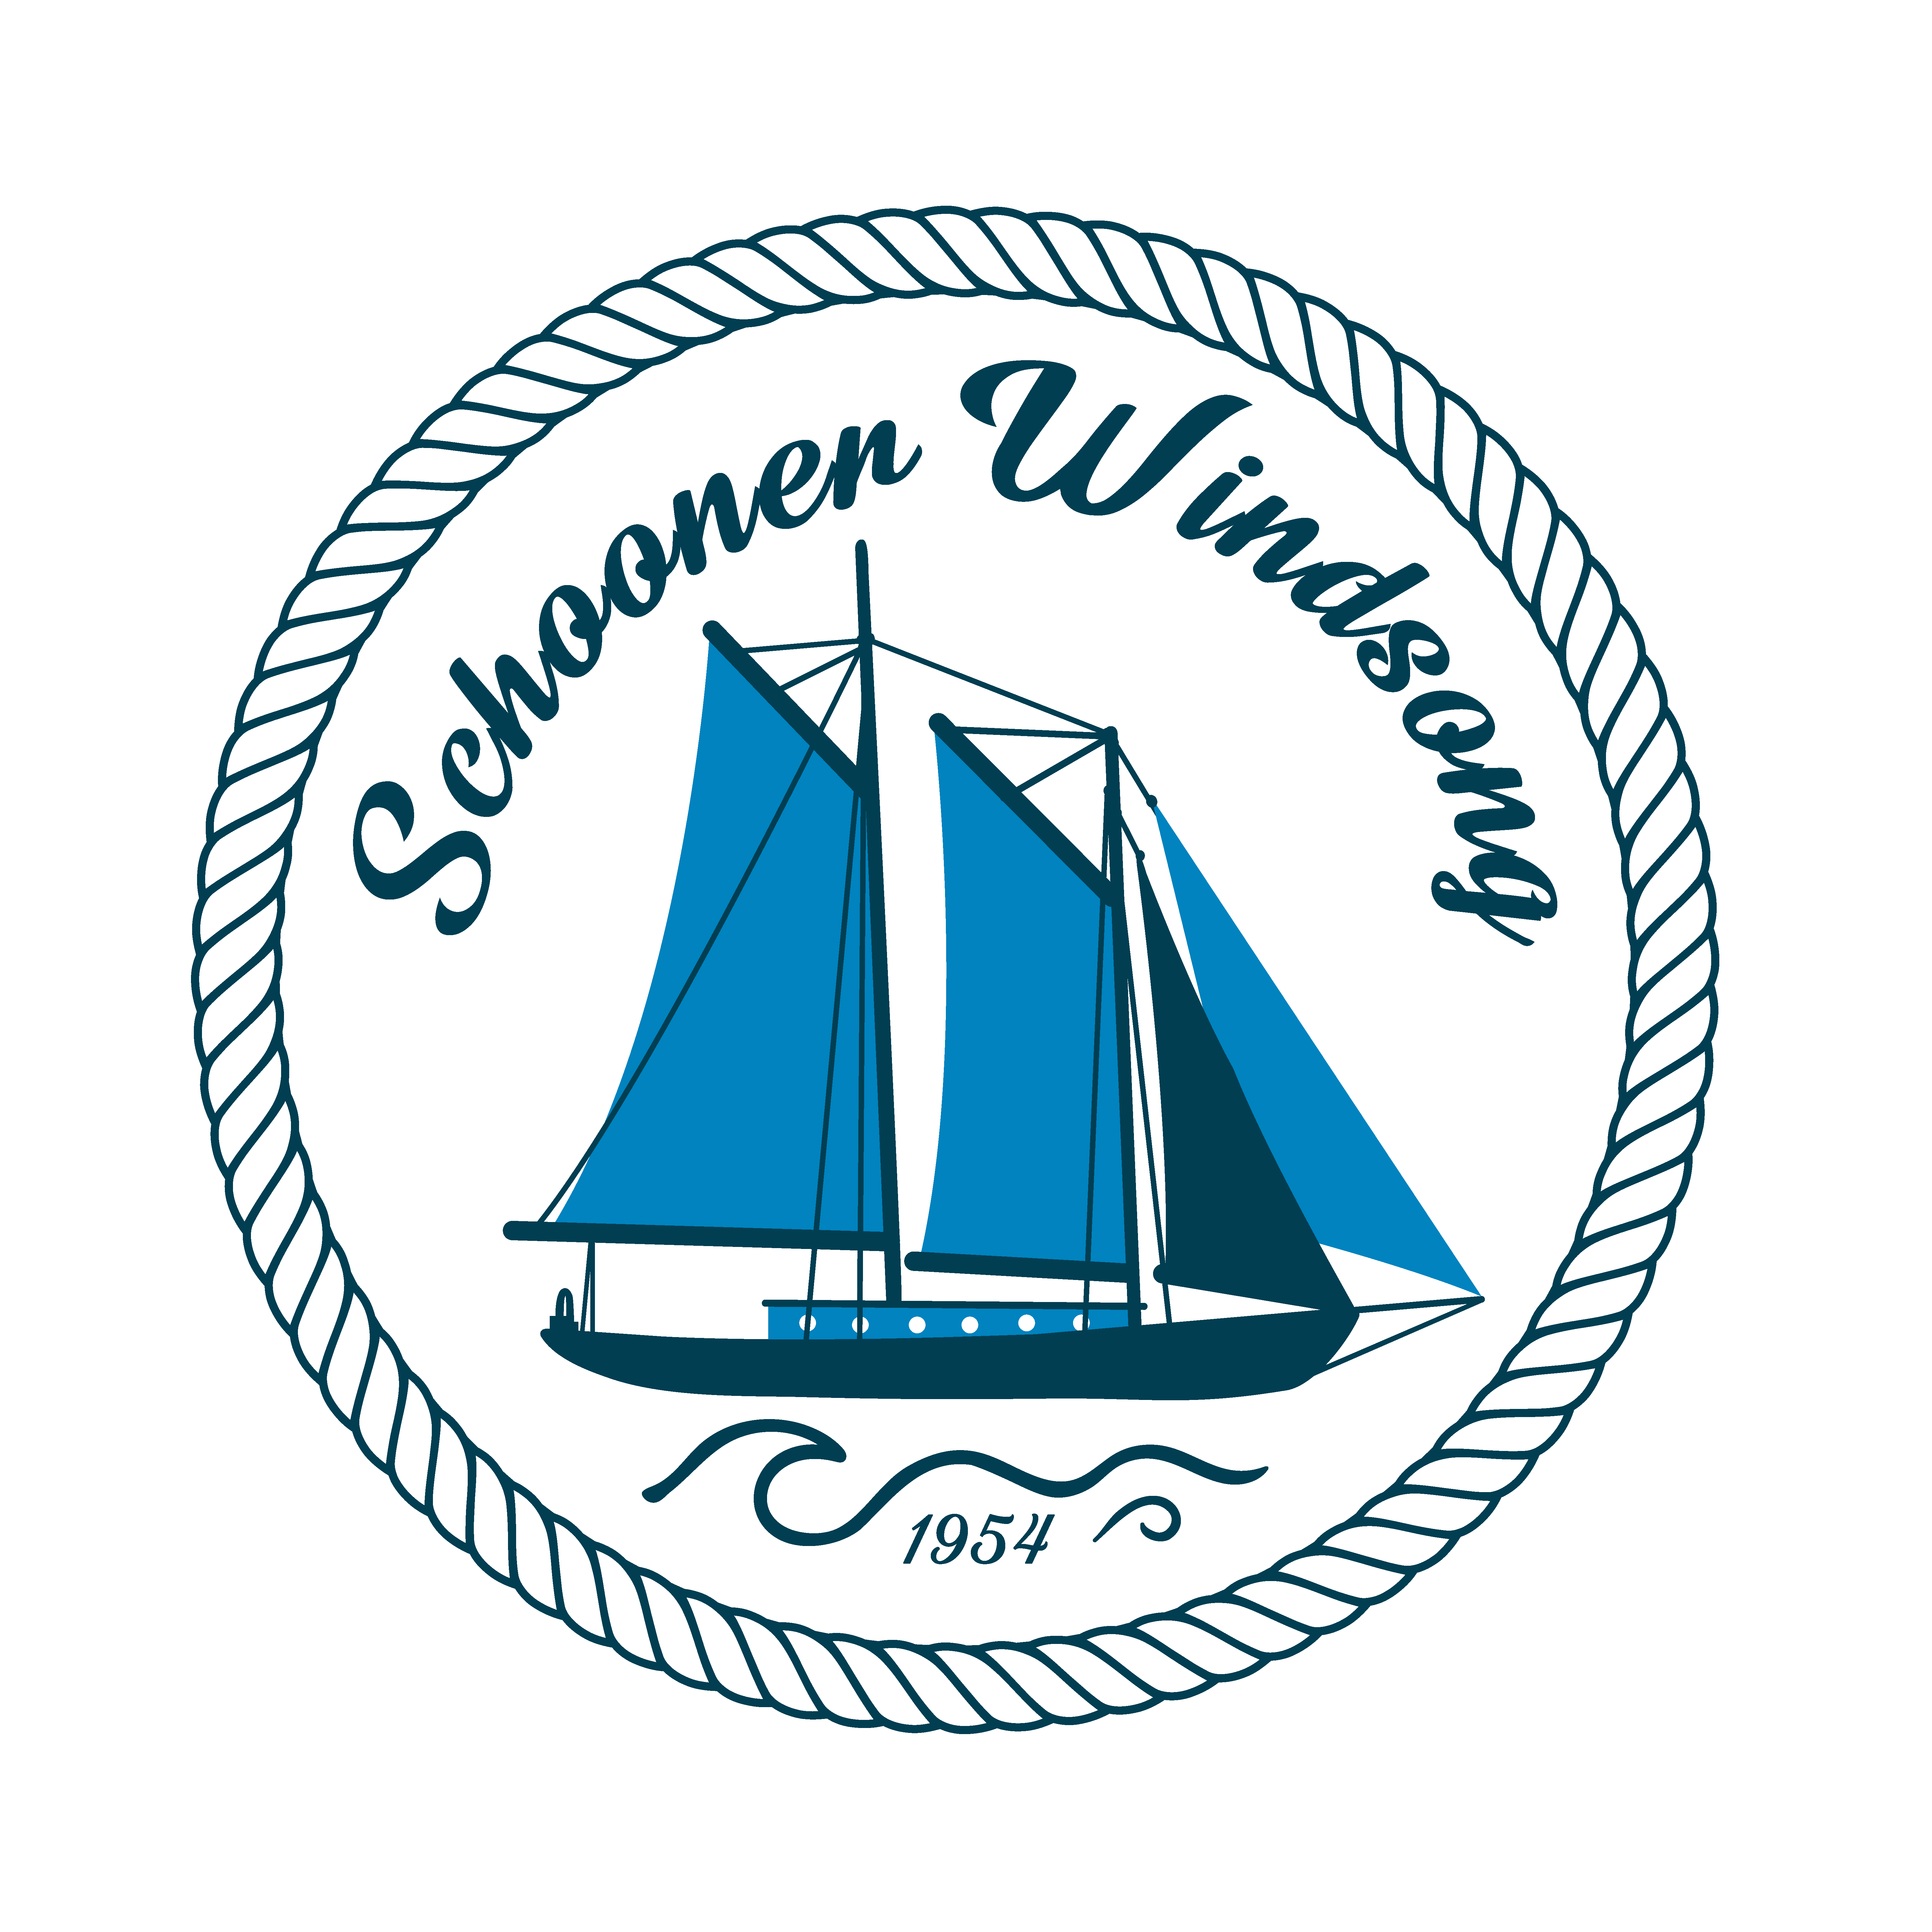 Schooner Windsong LLC, dba Eastern Shore Sailing